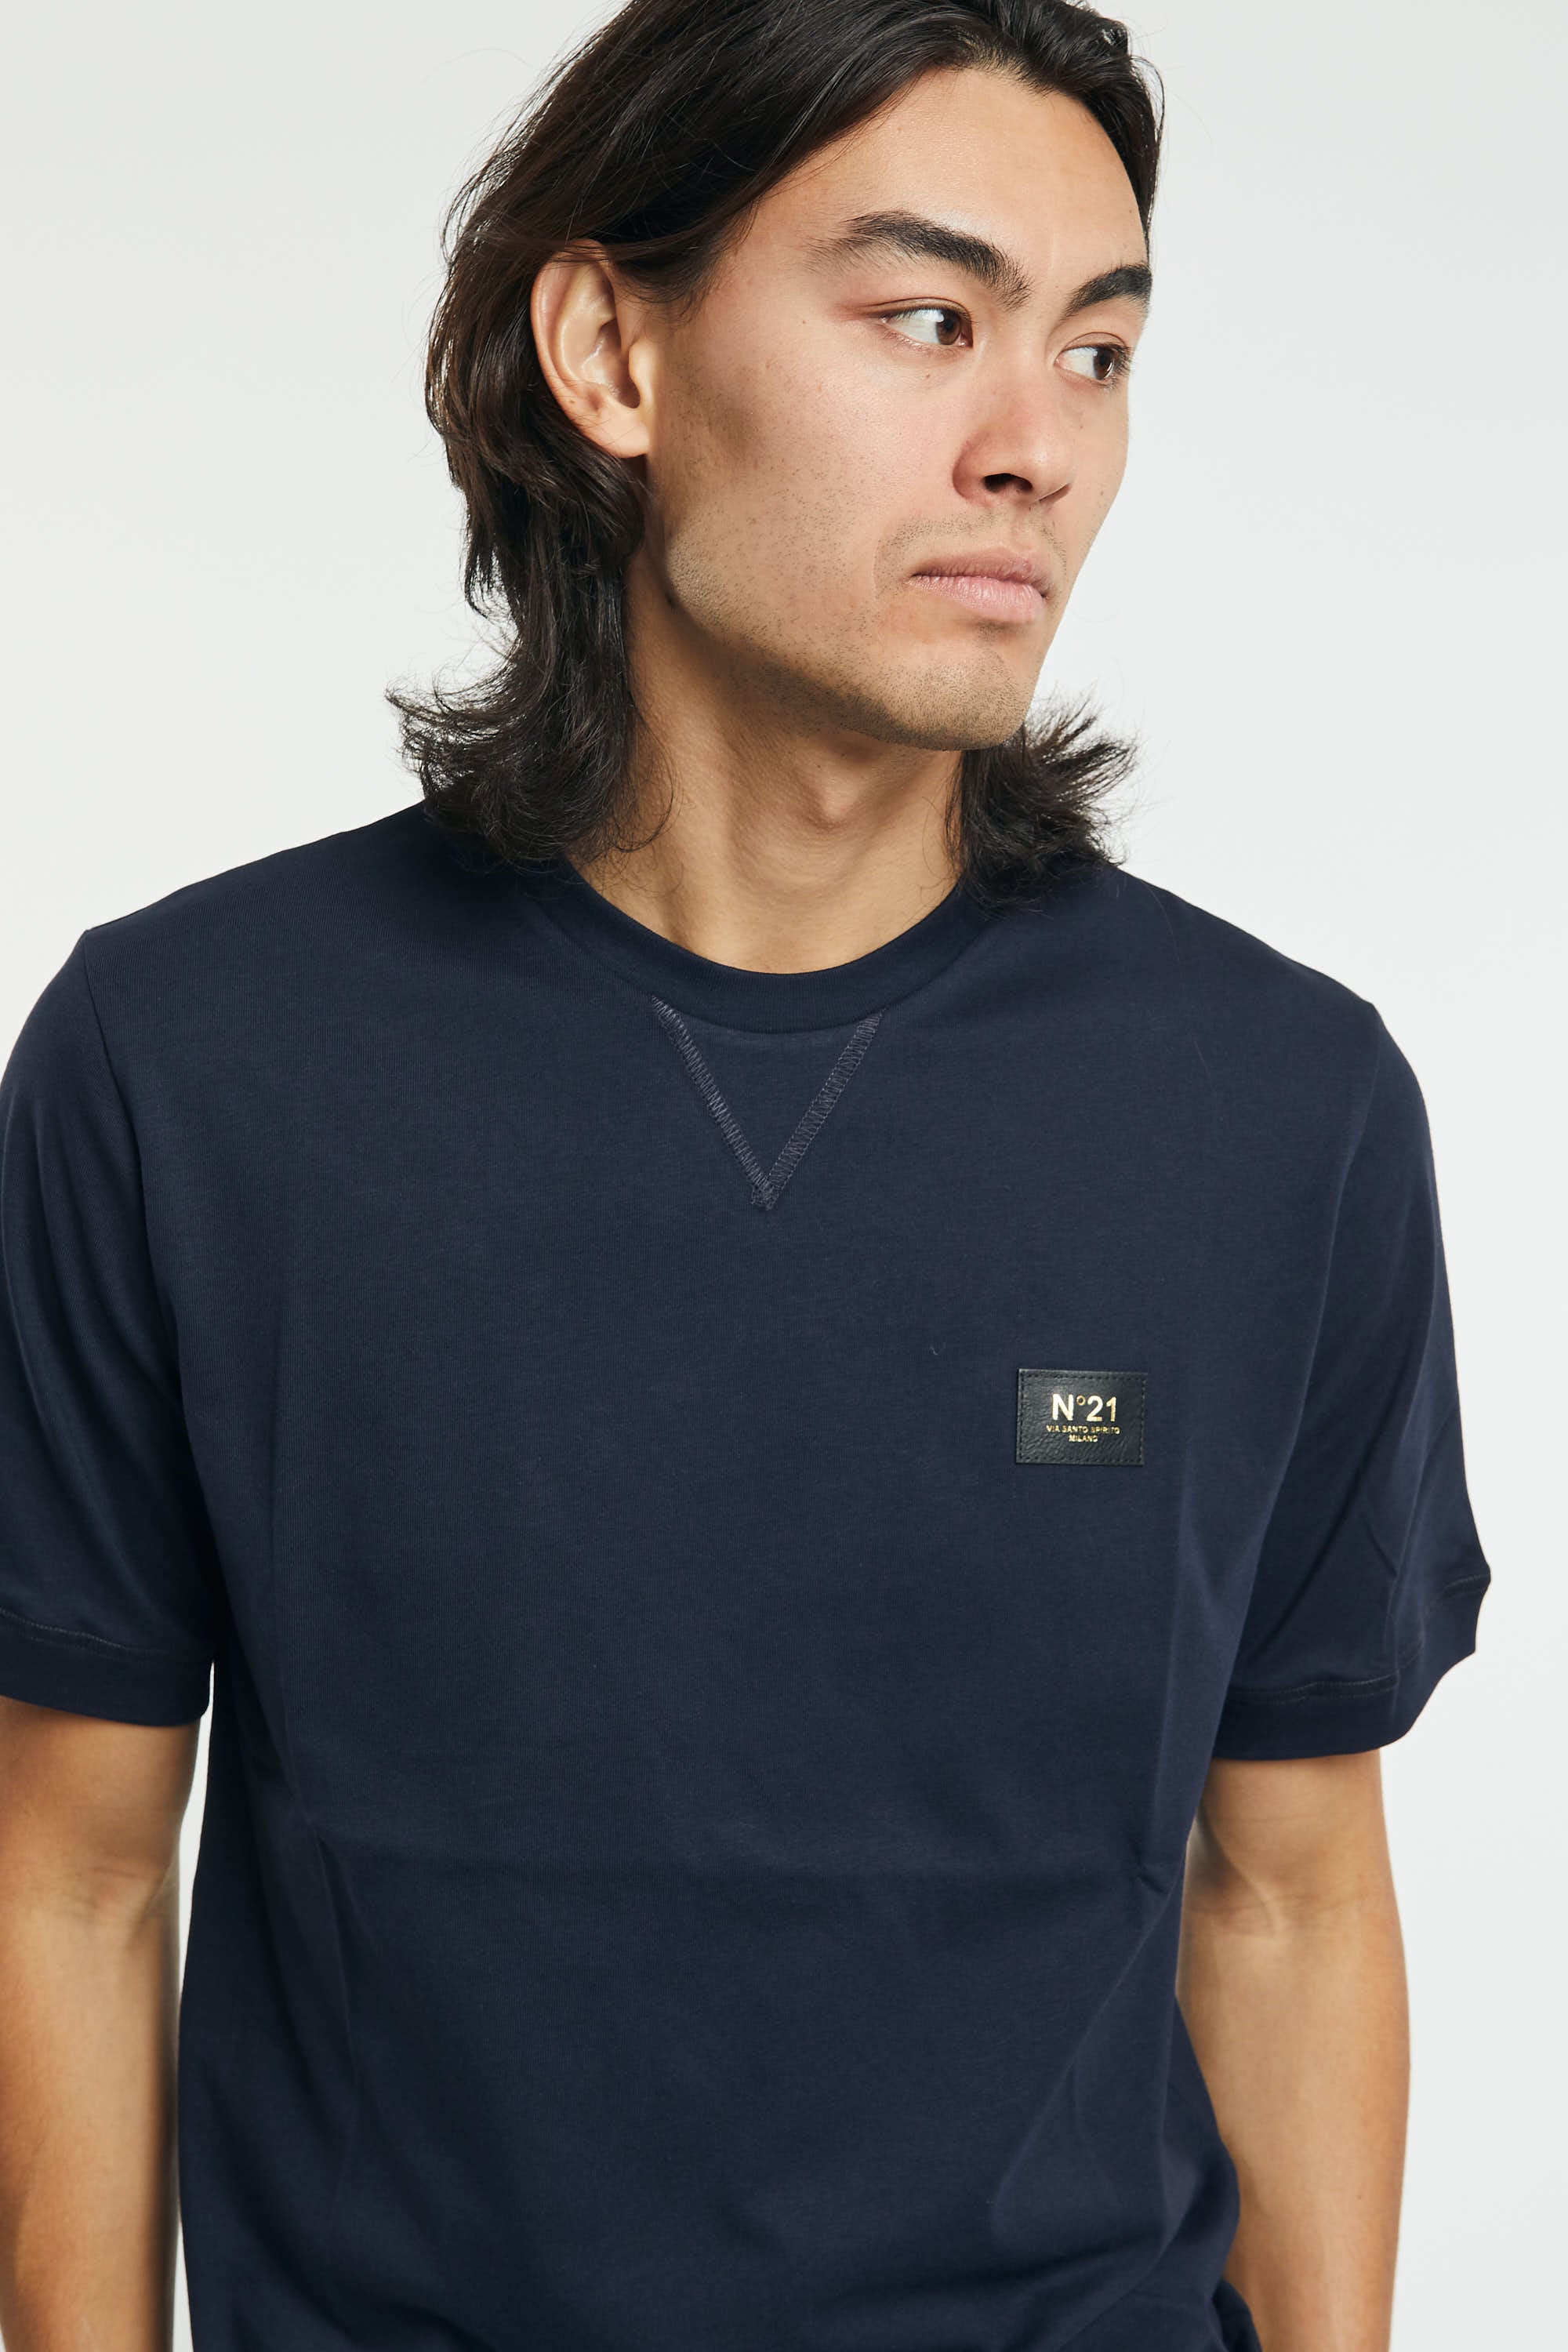 N°21 Cotton/Eco-leather Blue T-Shirt-5